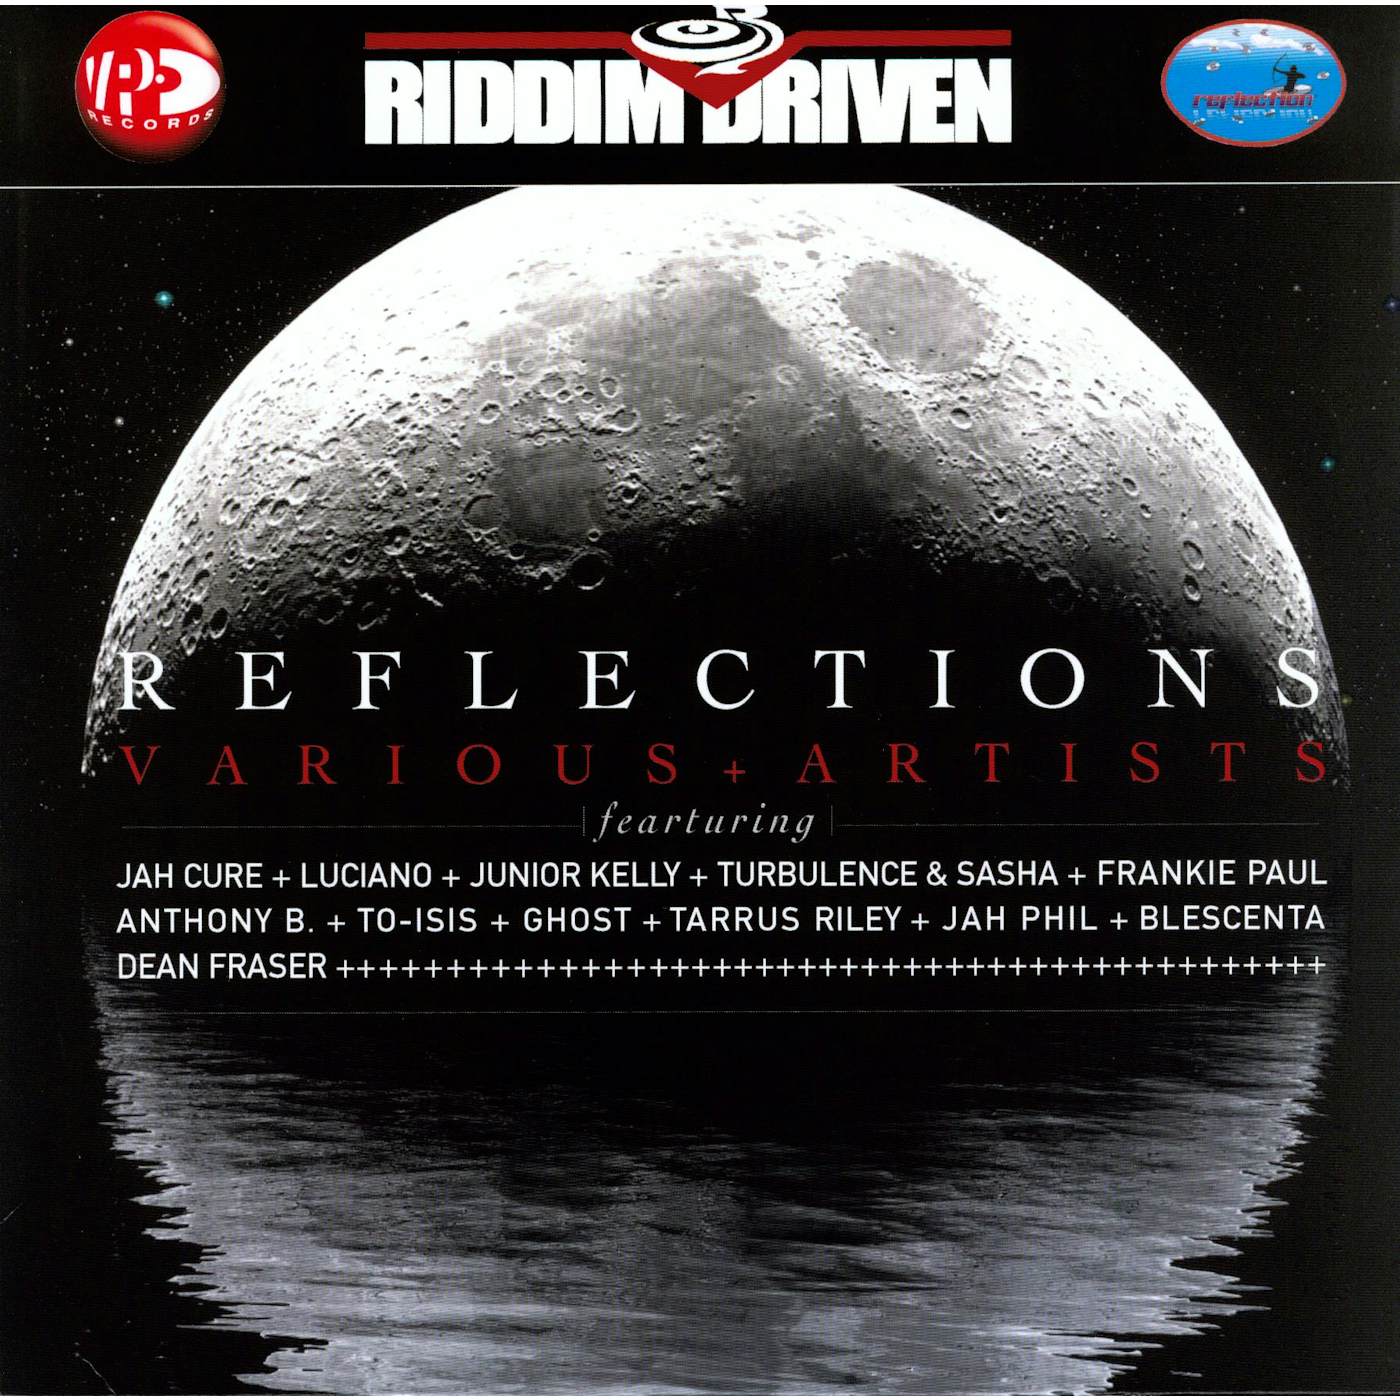 RIDDIM DRIVEN REFLECTIONS / VARIOUS Vinyl Record